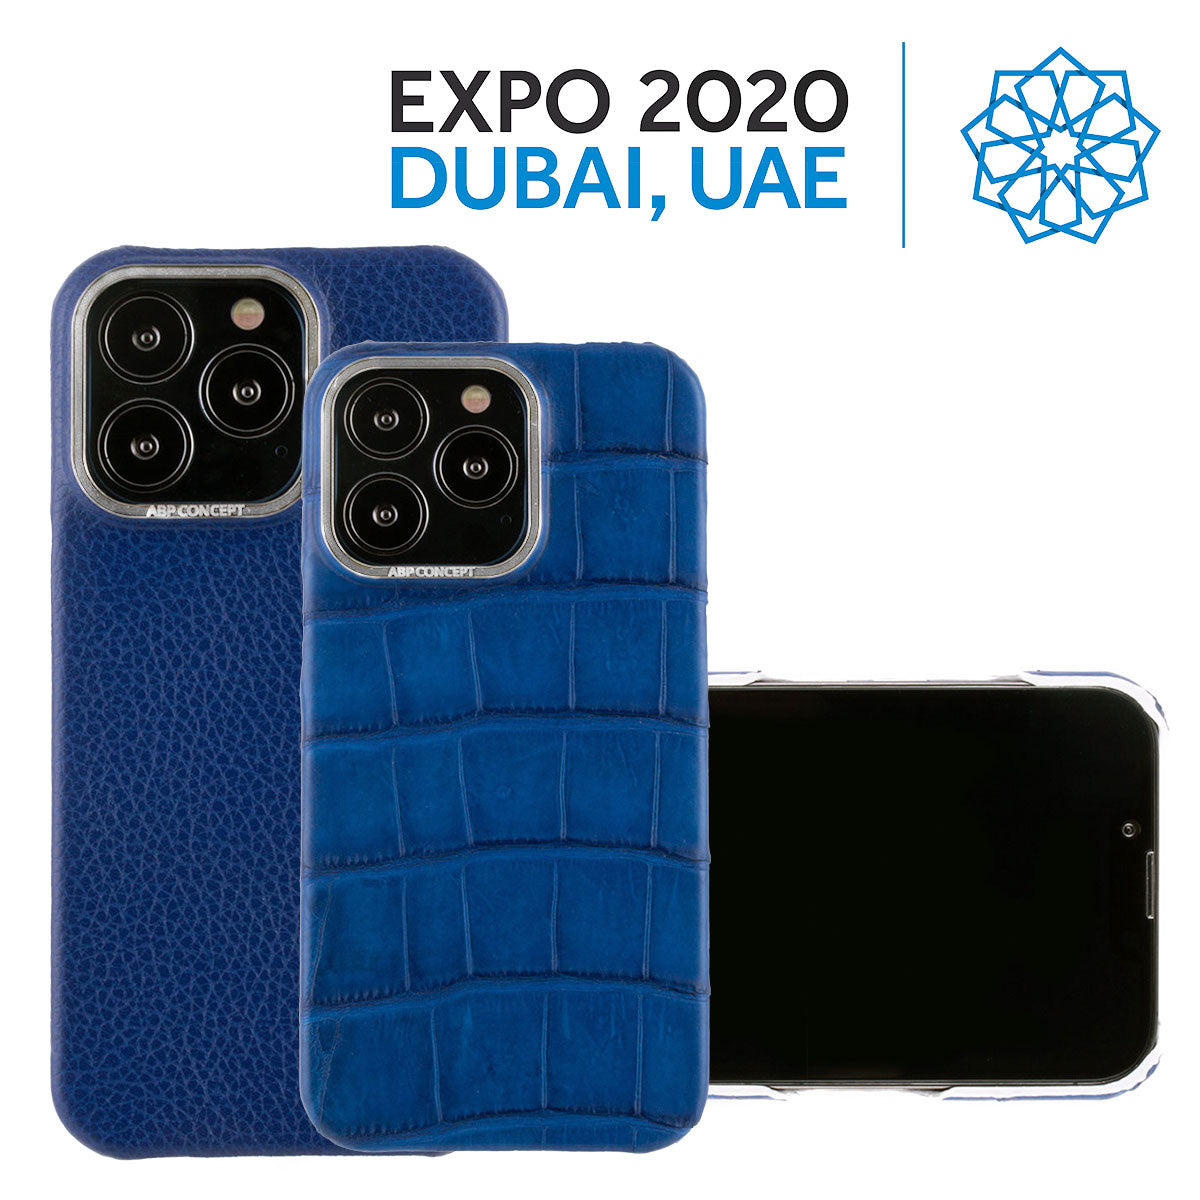 Tribute to Expo 2020 Dubai - Leather iPhone case - iPhone 13 & 12 ( Pro / Max ) - Blue alligator and buffalo